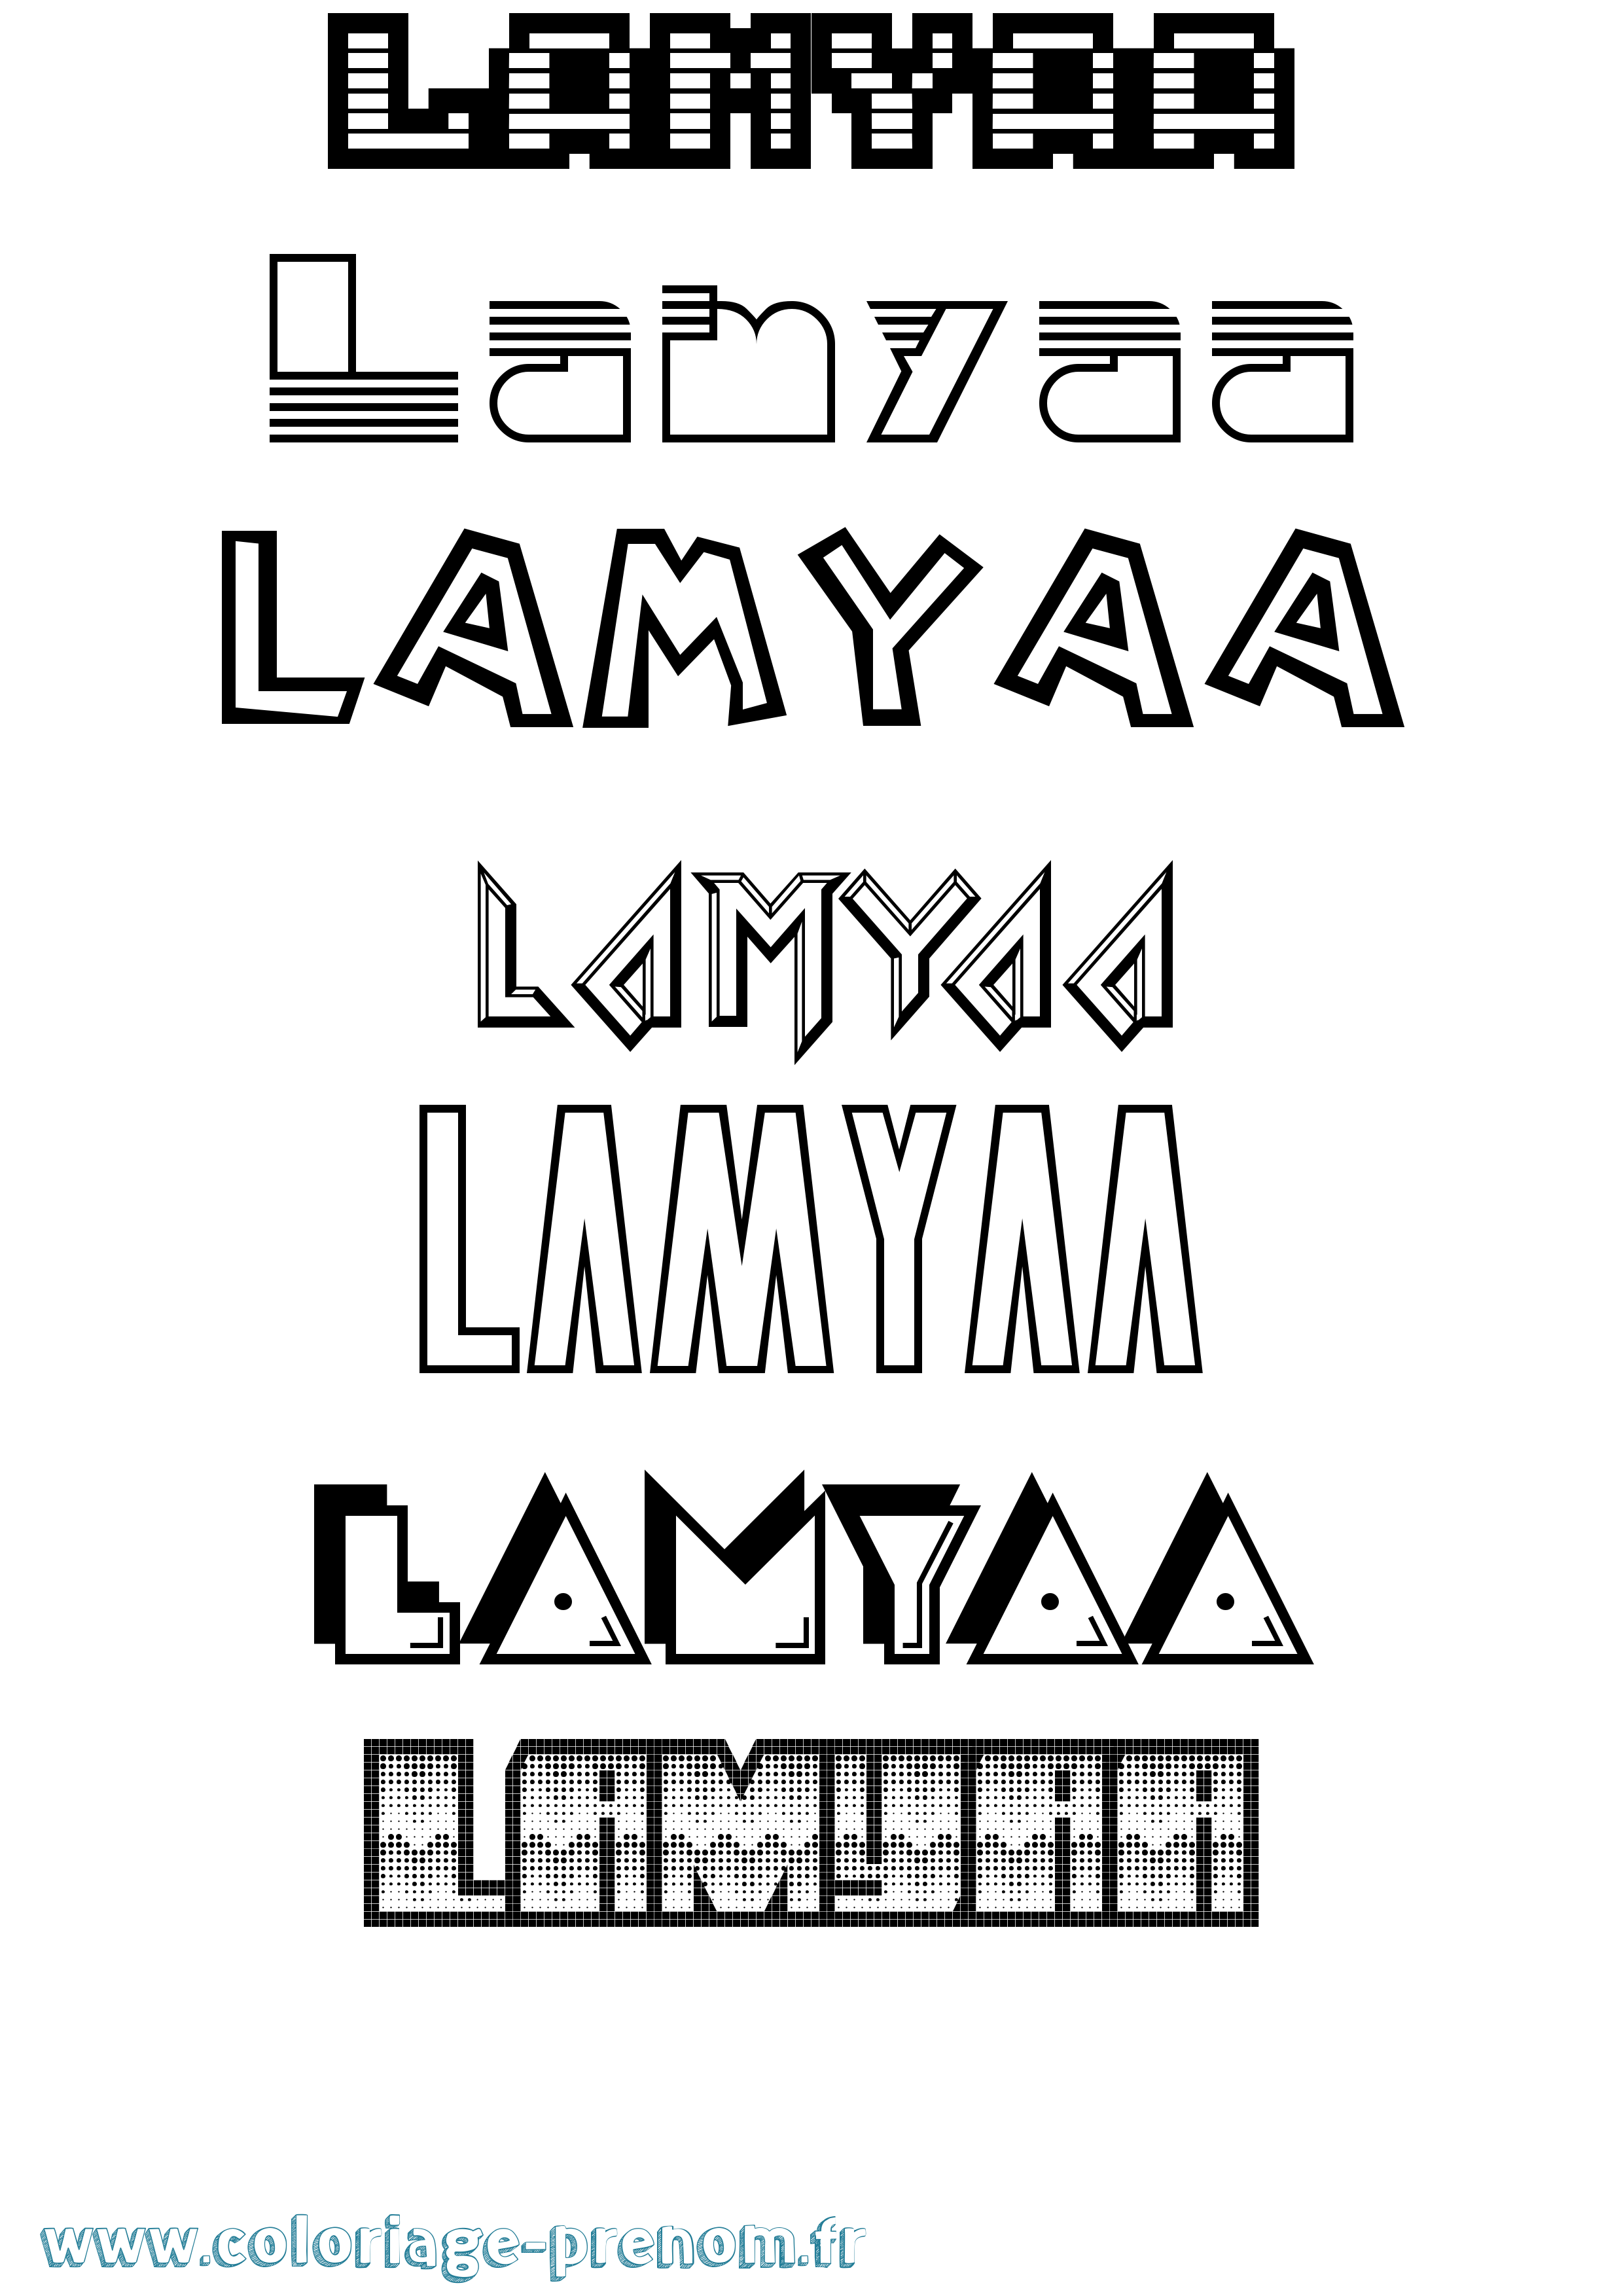 Coloriage prénom Lamyaa Jeux Vidéos